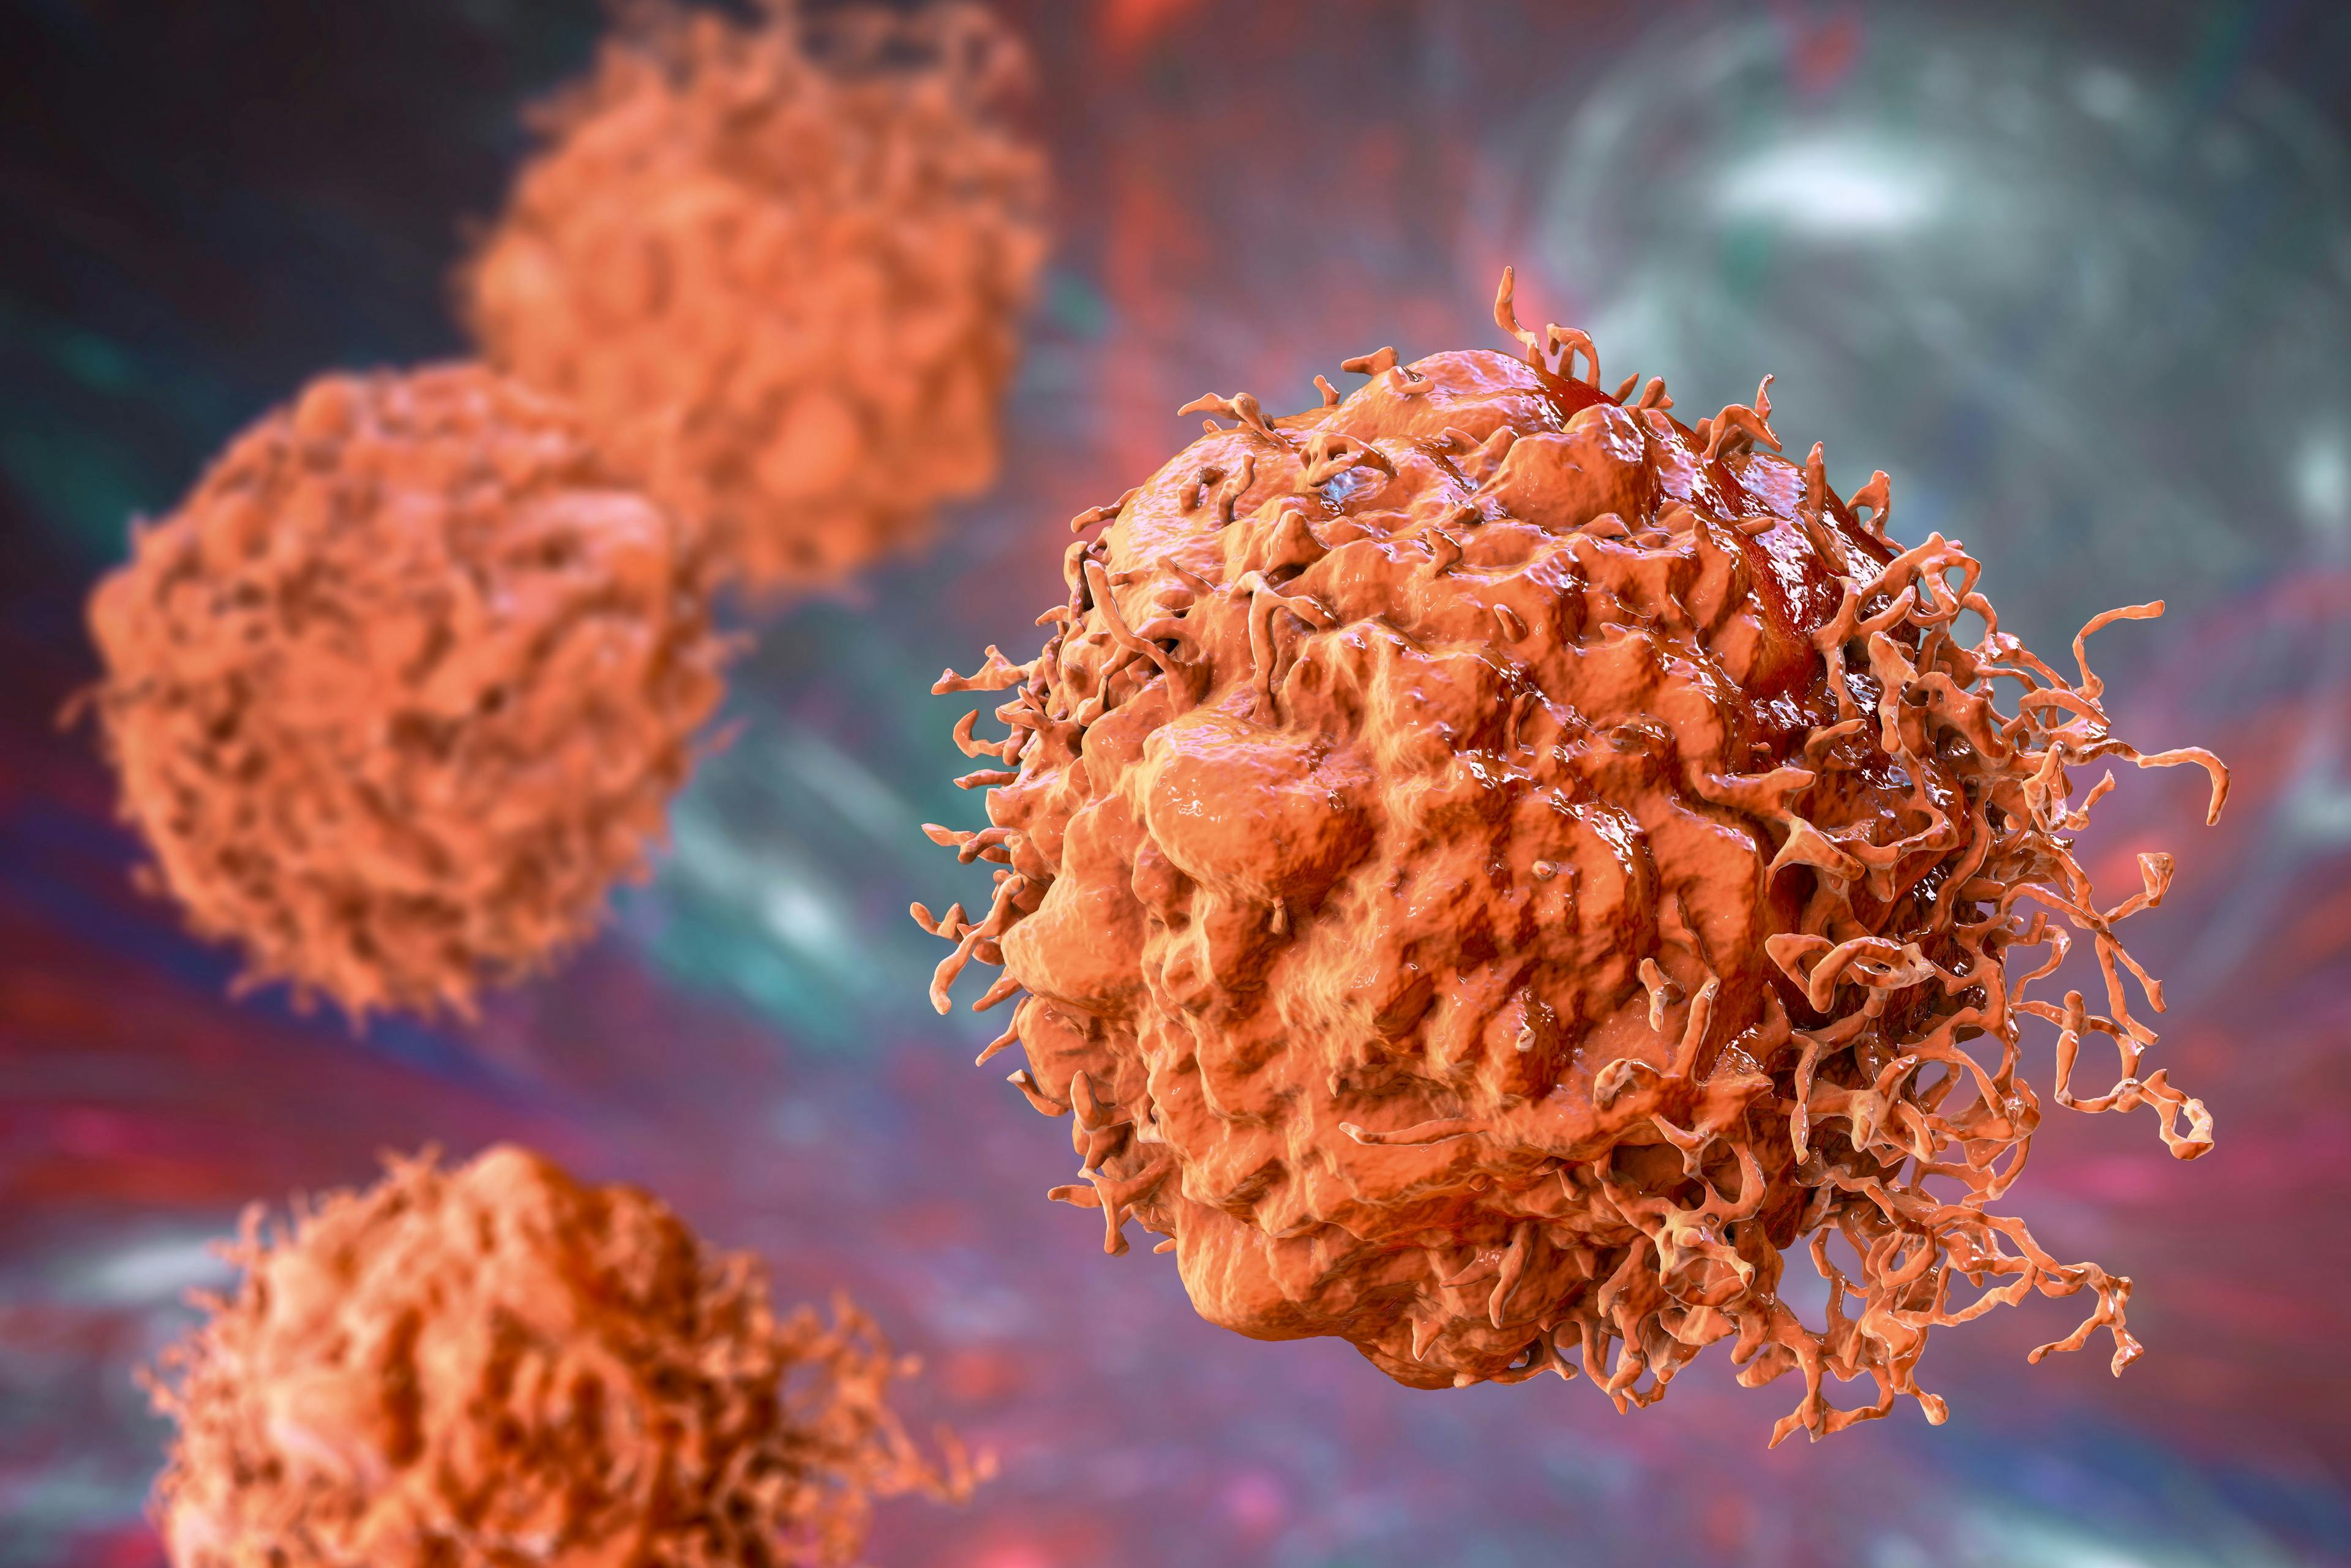 Cancer cells, 3D illustration | Image Credit: © Dr_Microbe - www.stock.adobe.com